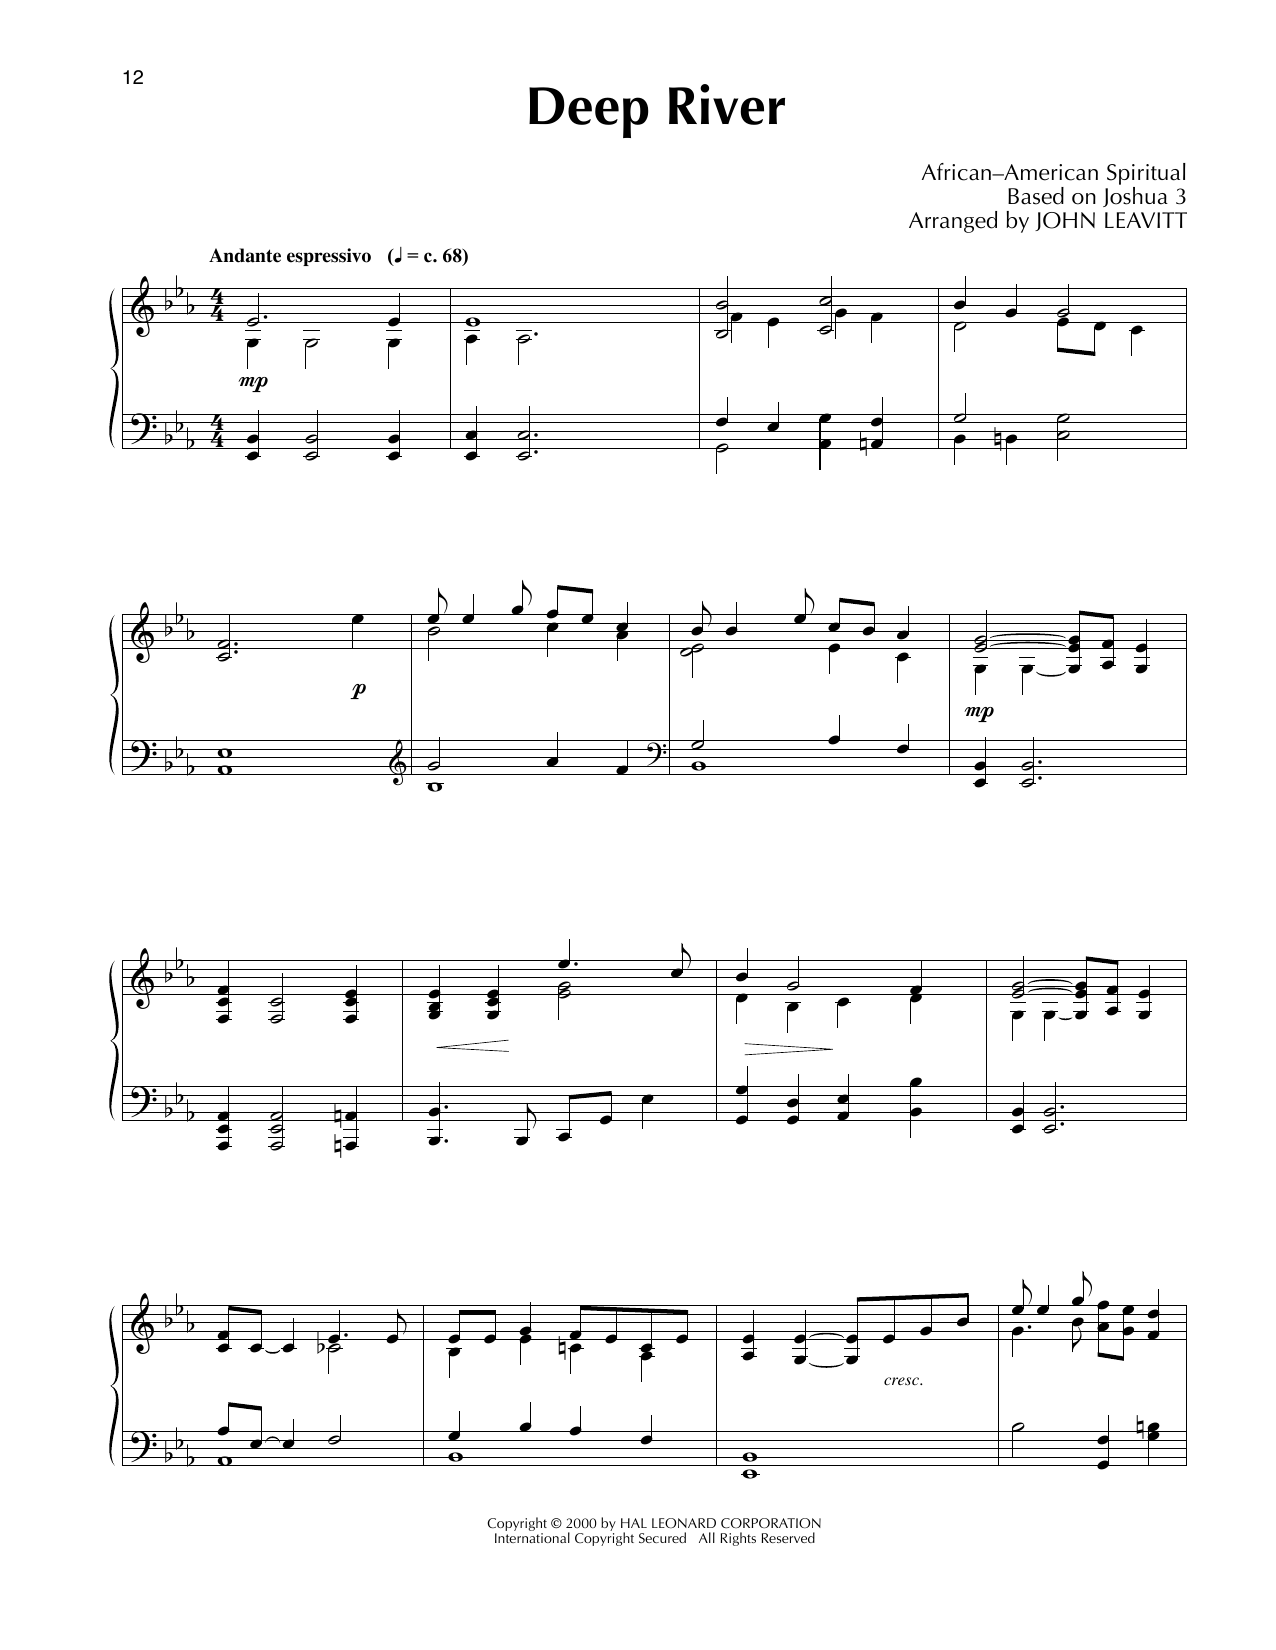 African-American Spiritual Deep River (arr. John Leavitt) Sheet Music Notes & Chords for Piano Solo - Download or Print PDF